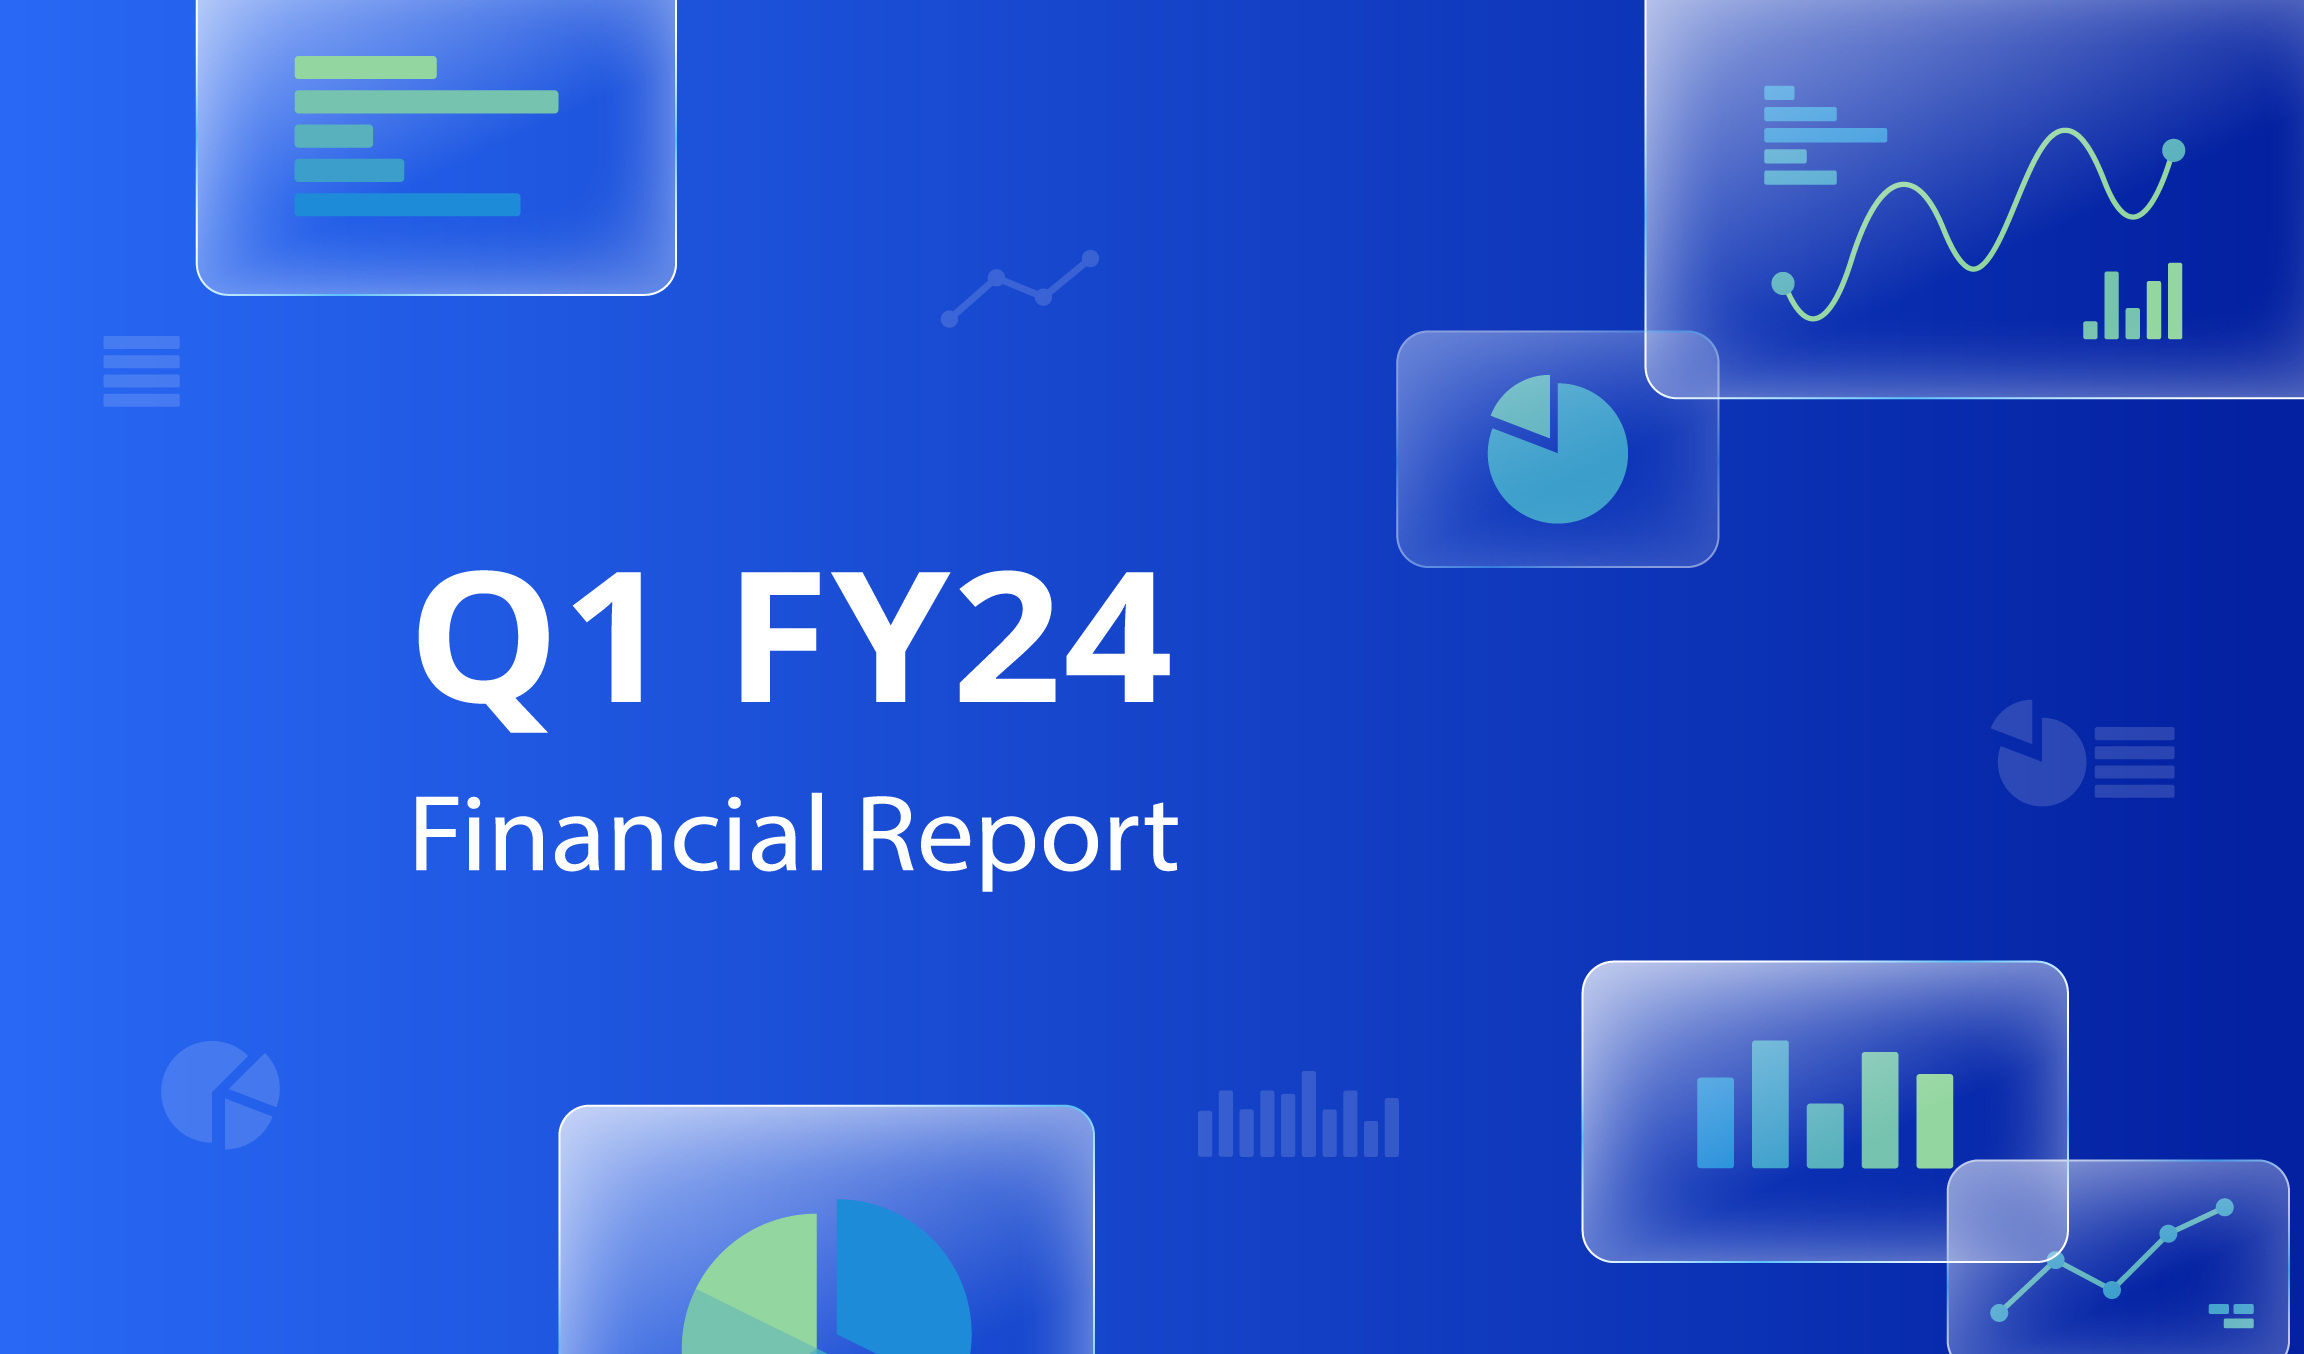 PR_FY24 Q1 Finanical report_banner-1